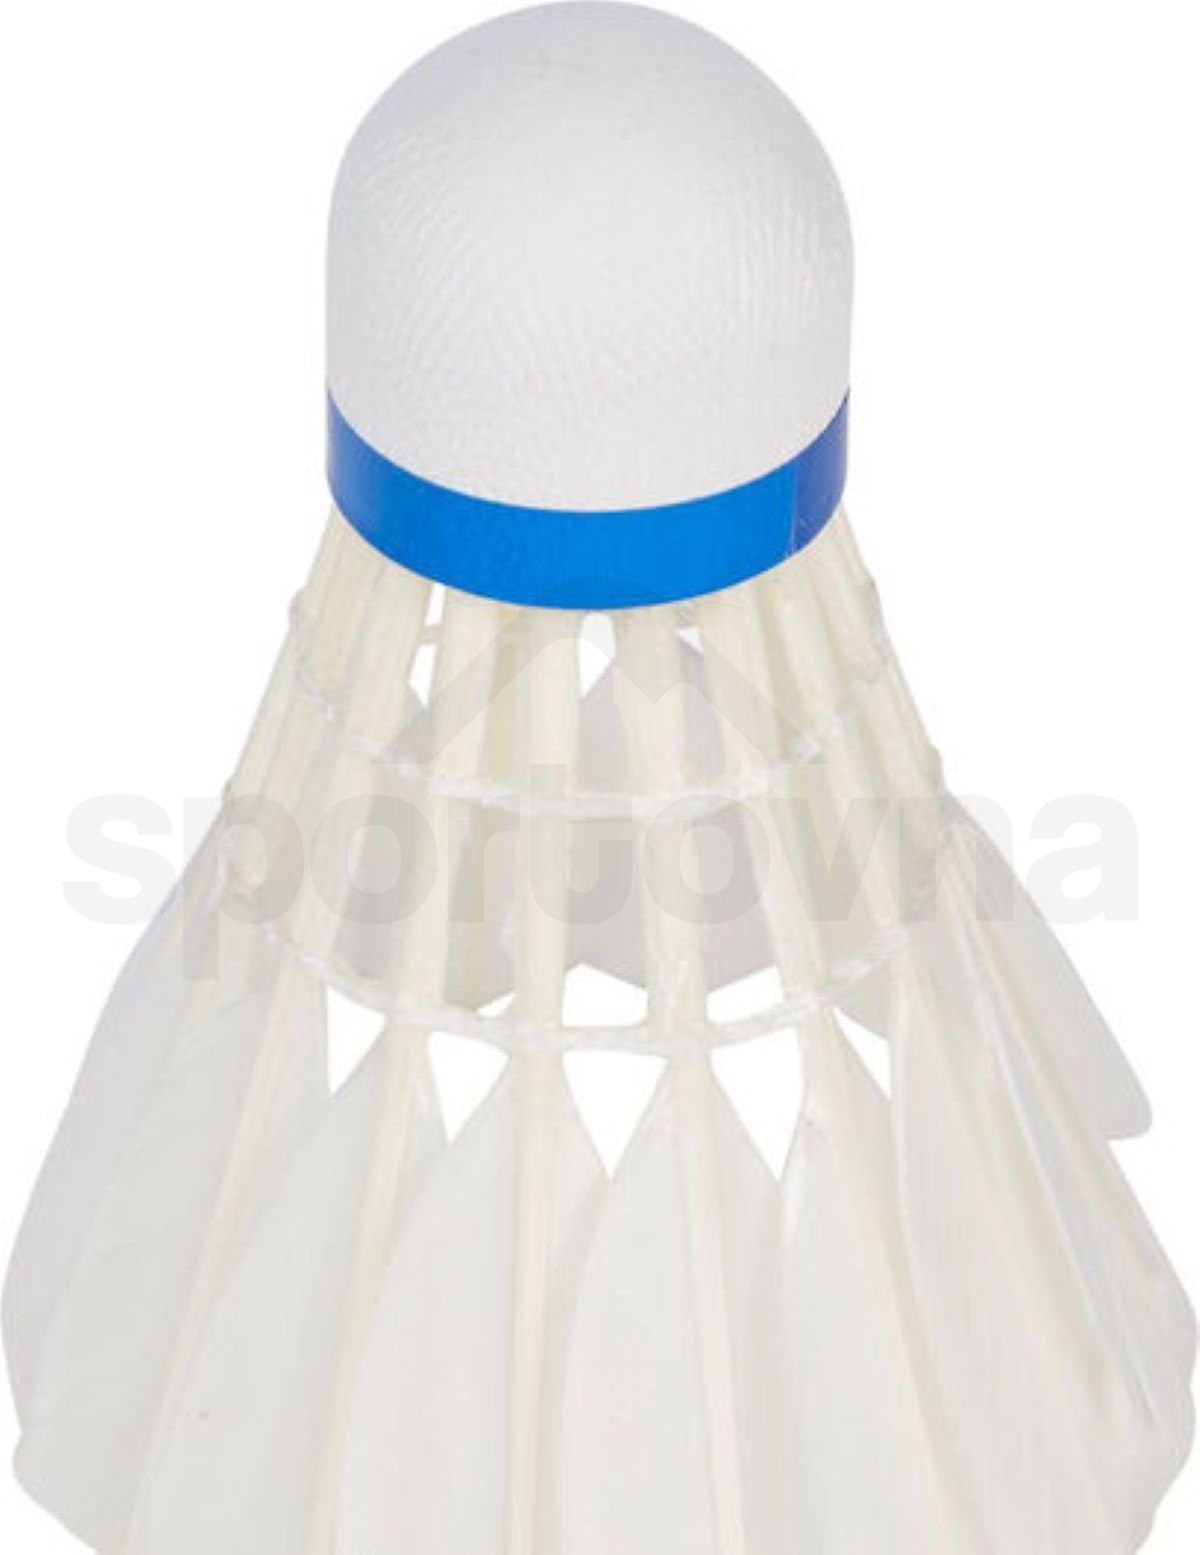 Badmintonový míček Pro Touch SP 900 - bílá